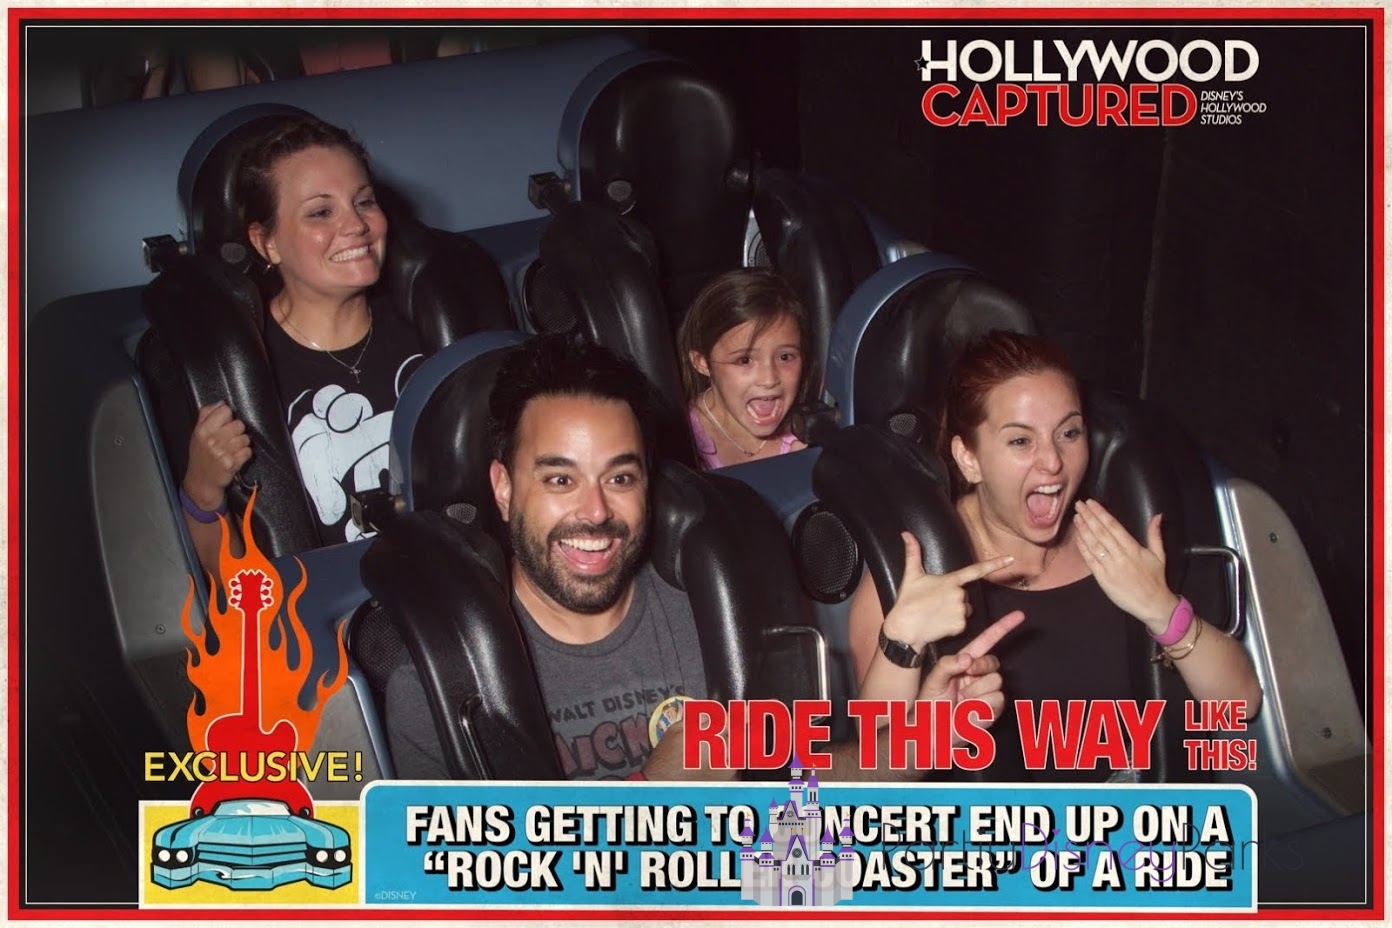 Rock'n'Roller Coaster - Hollywood Studios Top Attractions